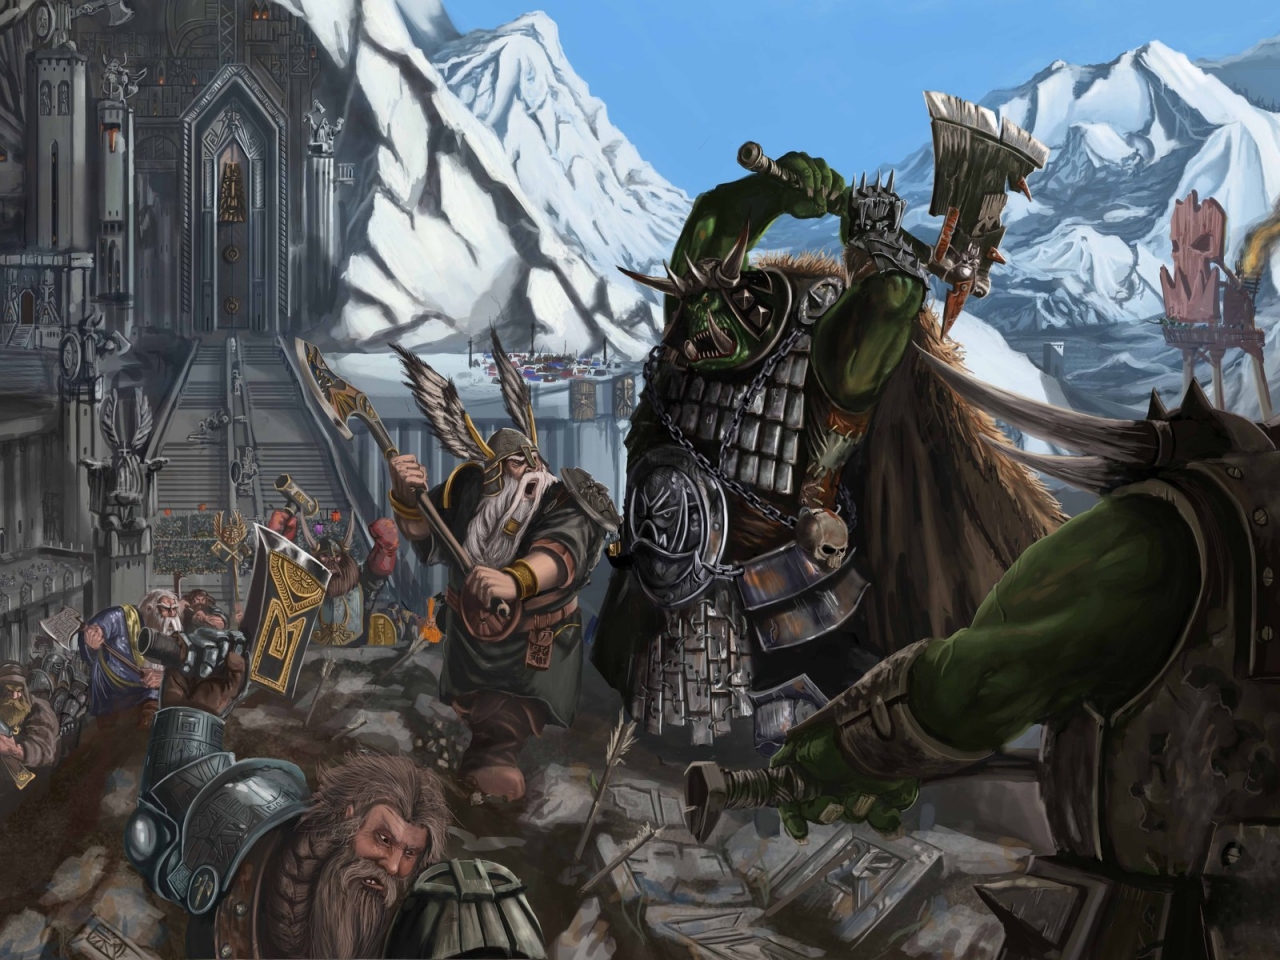 Warhammer Fantasy Battles for 1280 x 960 resolution